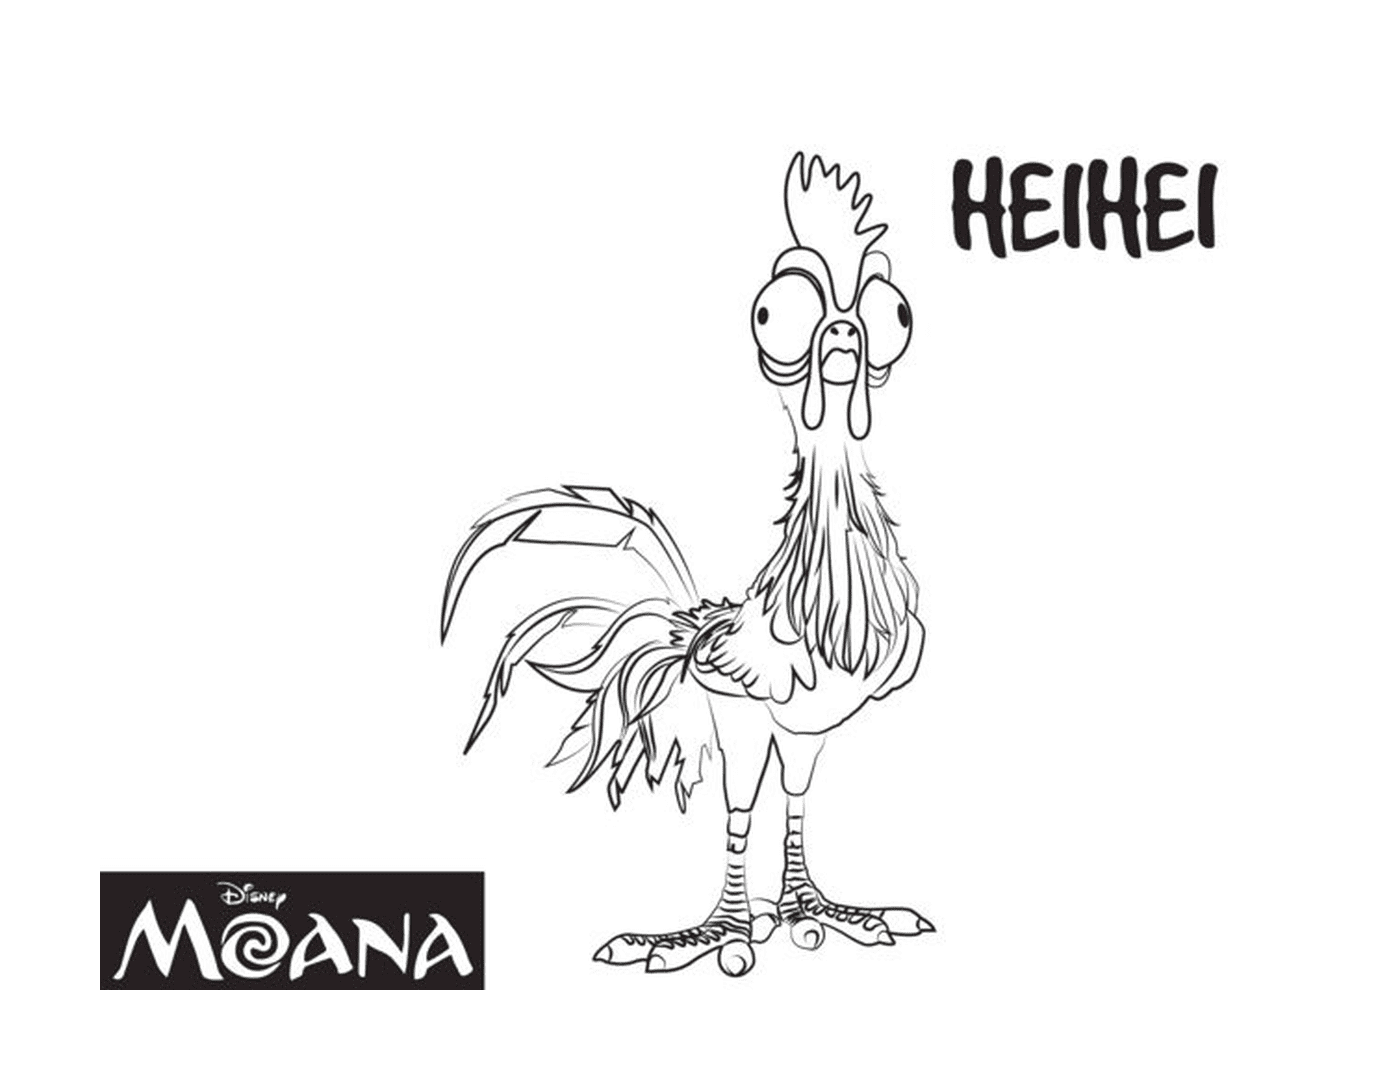  Heihei, la polla hilarante 